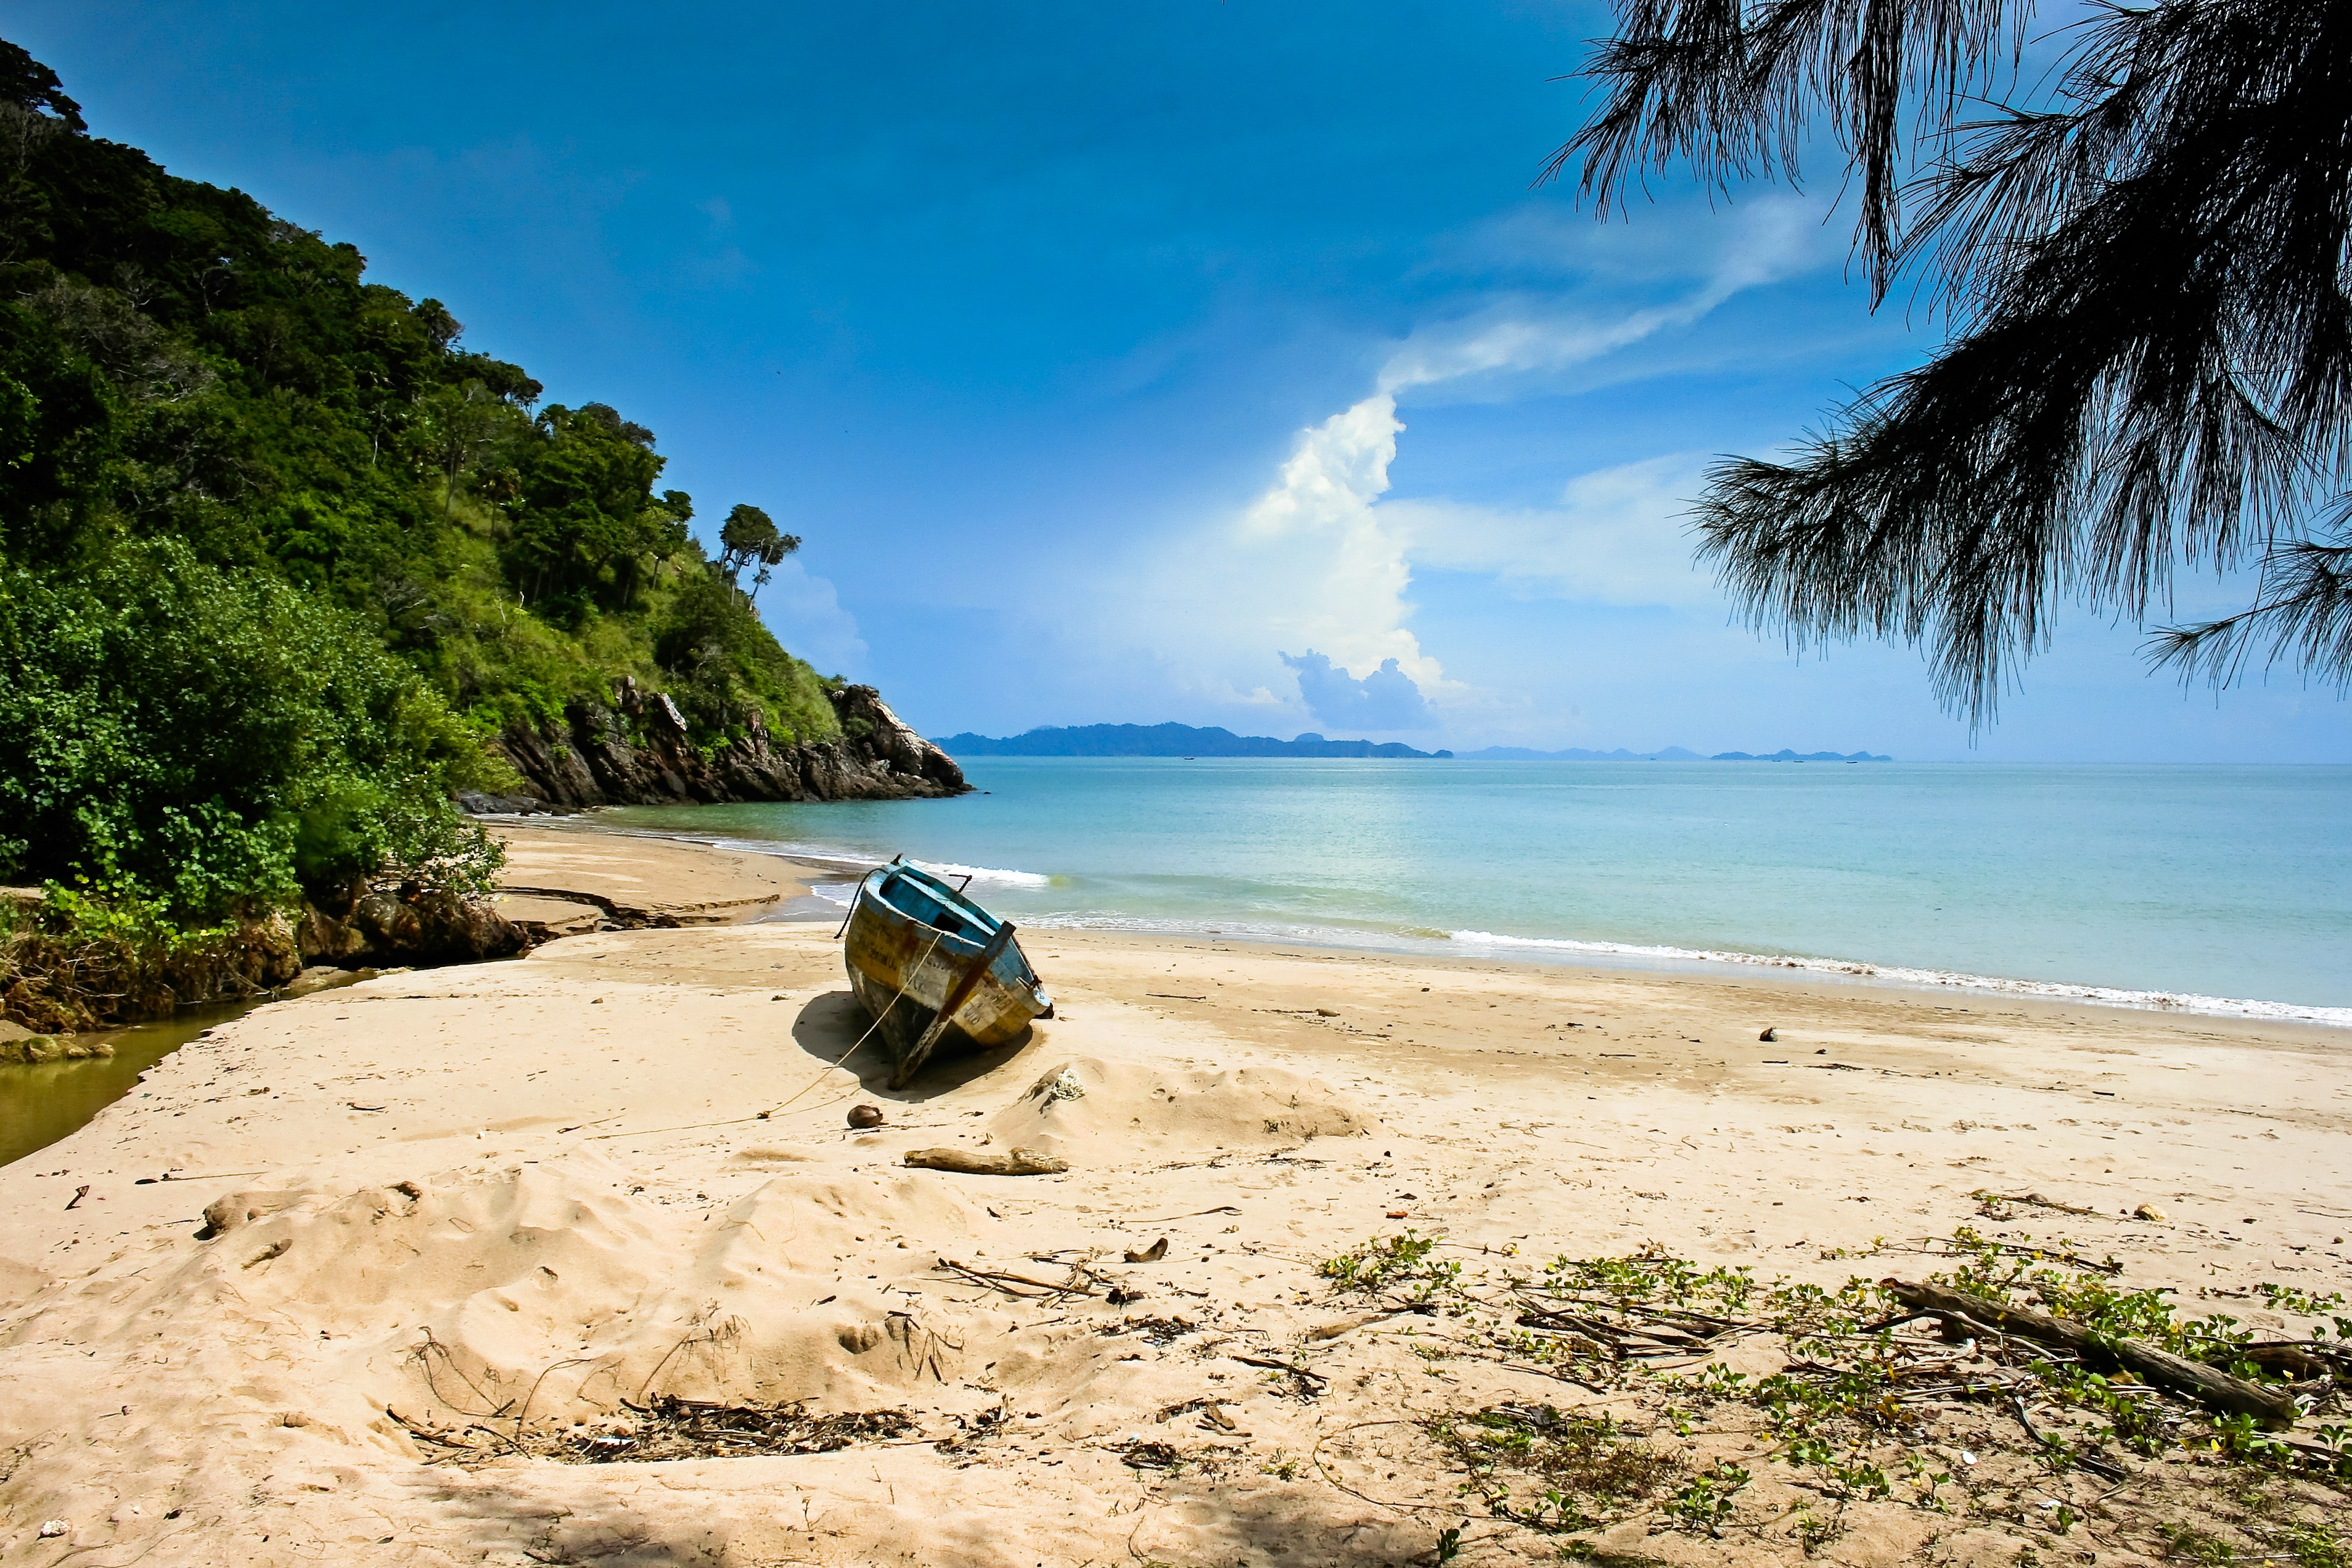 Descarga gratuita de fondo de pantalla para móvil de Mar, Playa, Día Festivo, Zona Tropical, Barco, Fotografía, Tailandia, Isla Lanta.